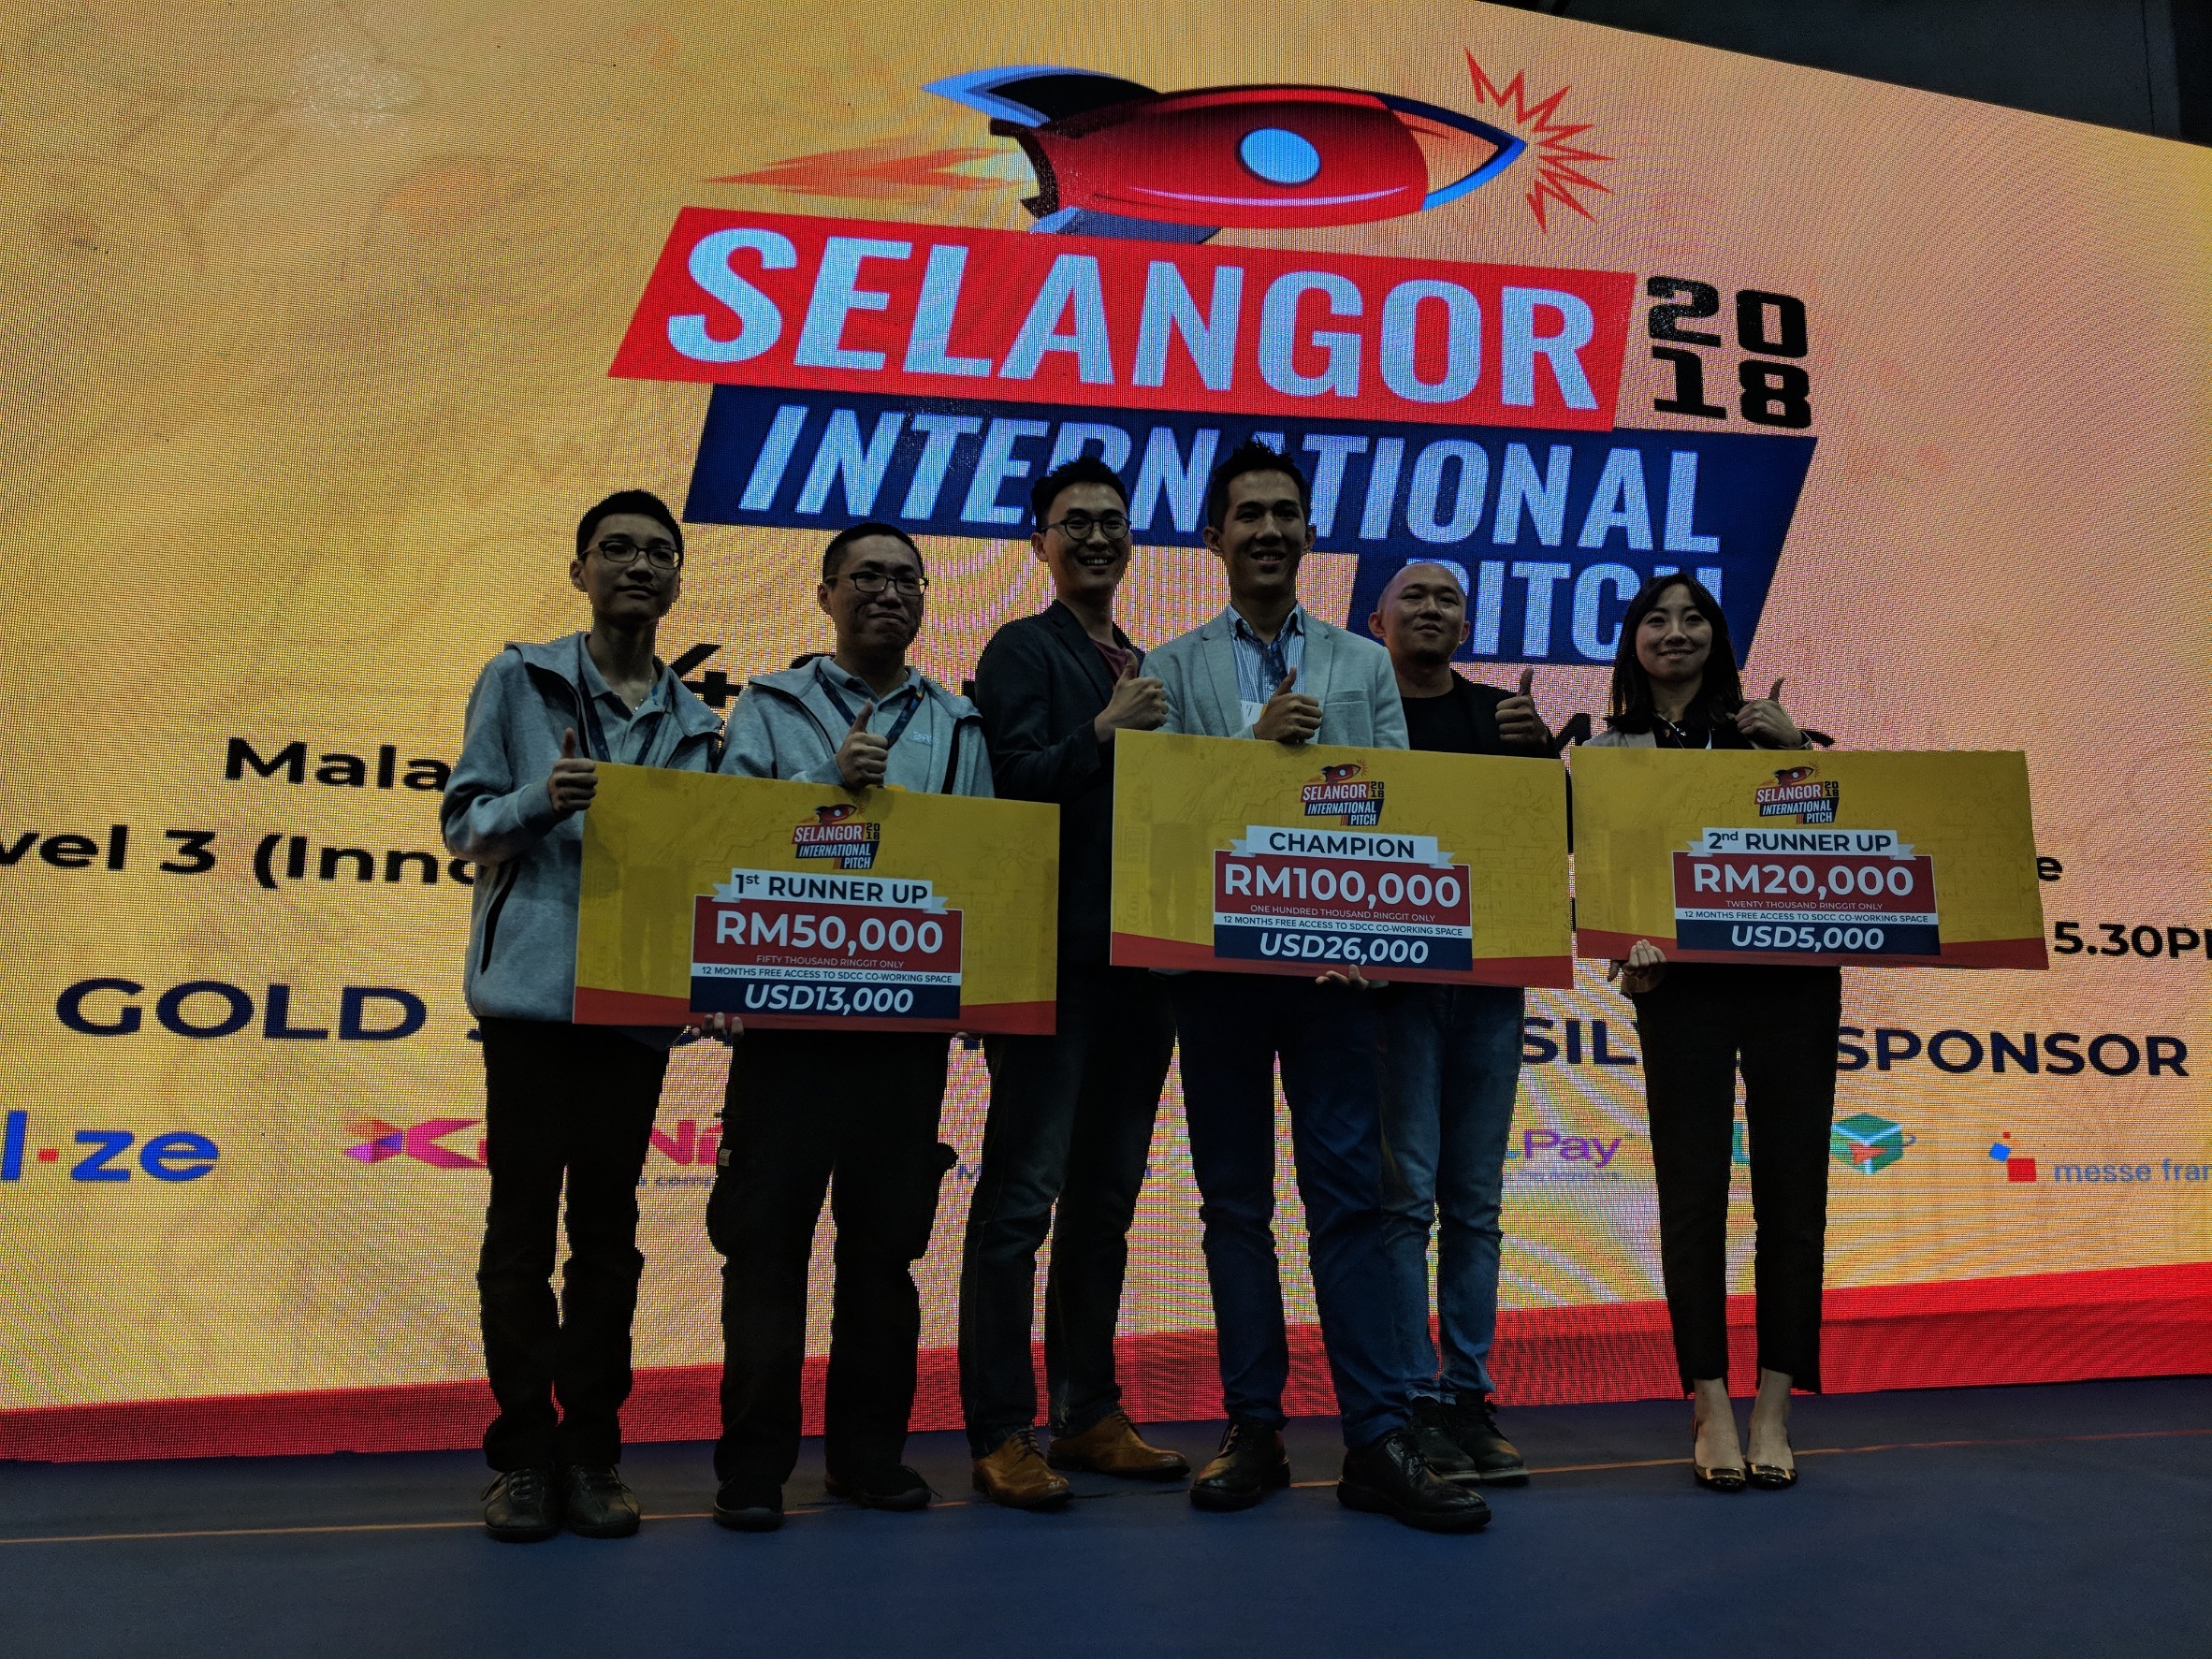 Selangor International Pitch - ible Airvida - Wearable Air Purifier